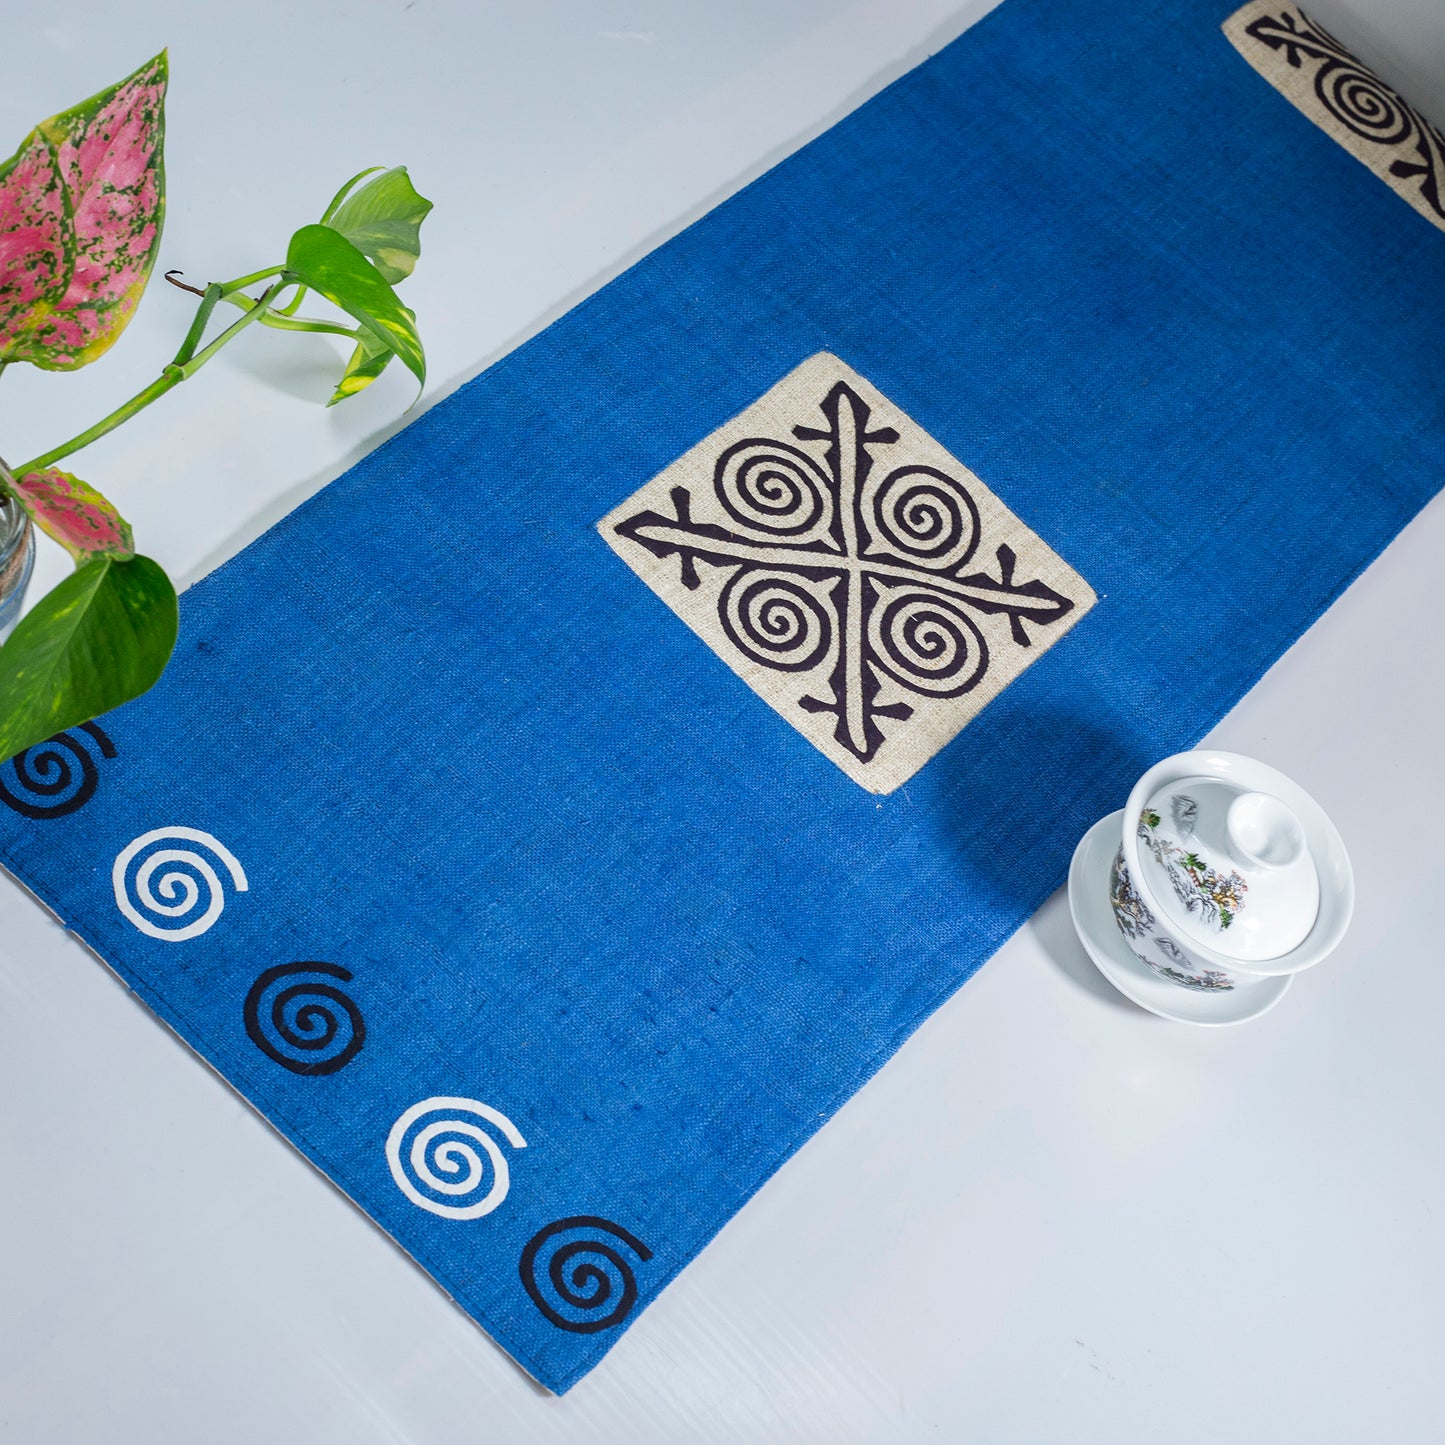 Indigo blue Hemp Table Runner, black patterns, hand-stitched details at both ends